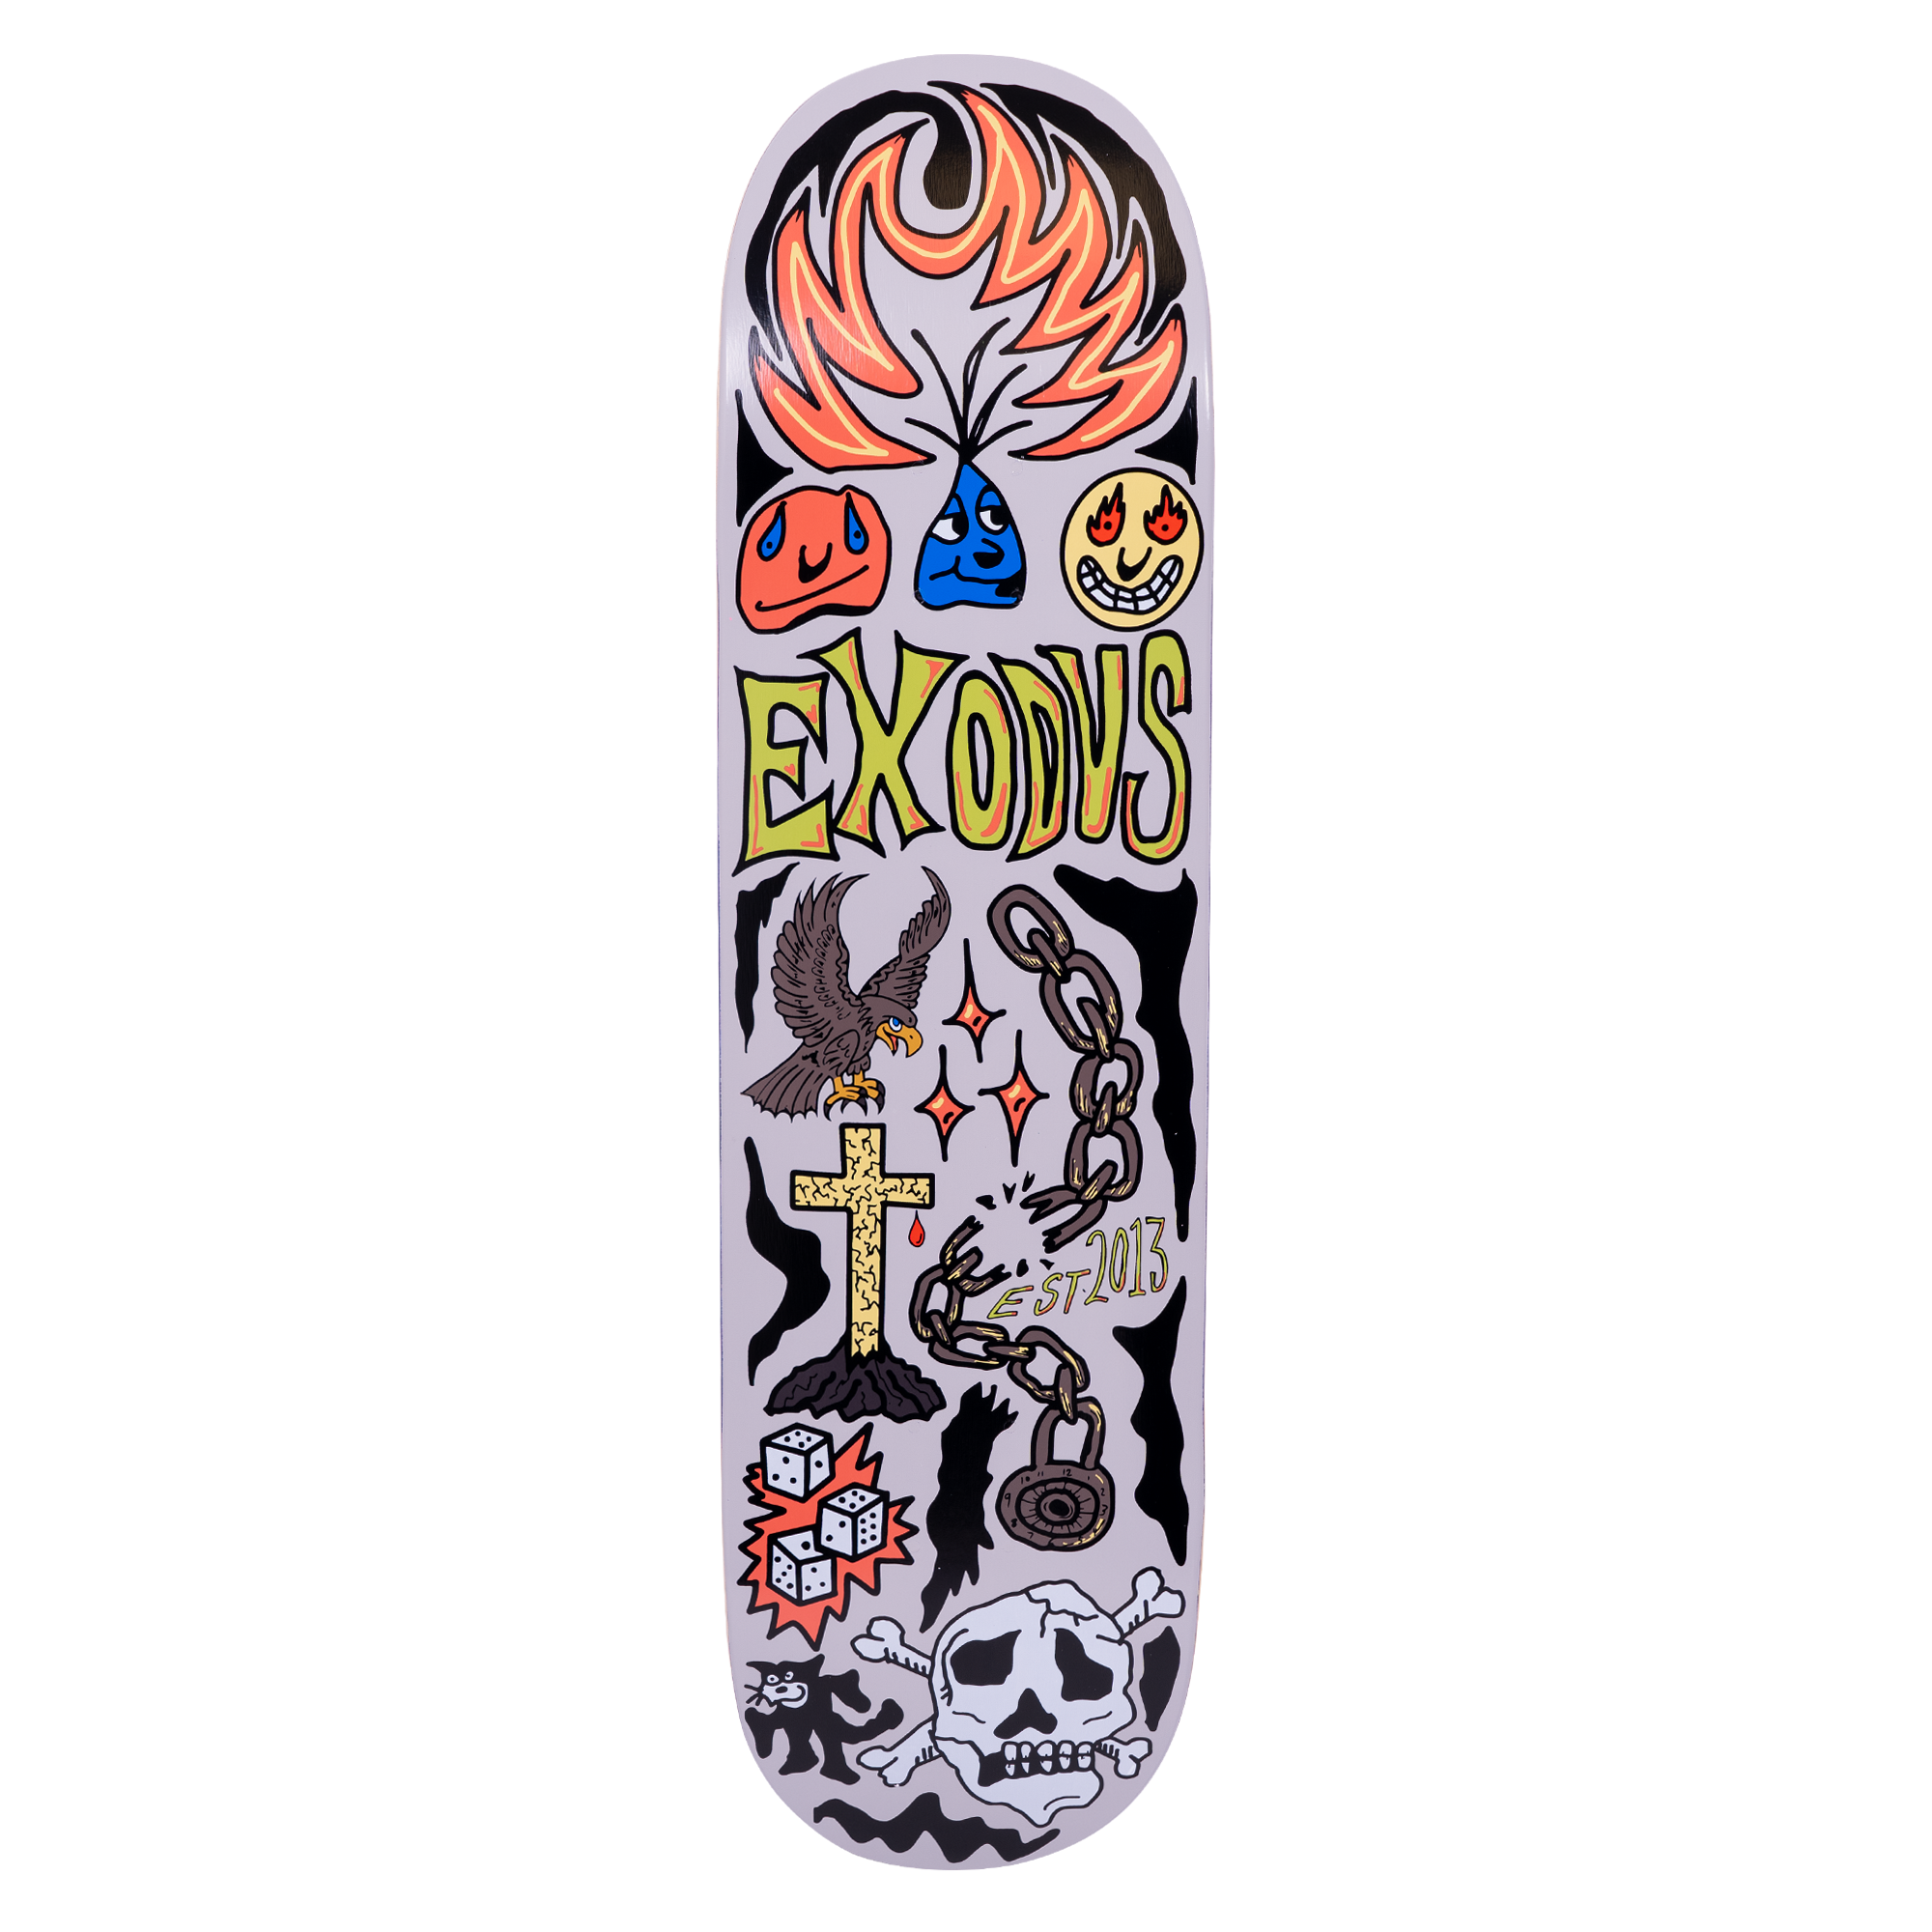 Sketchy Exodus Skateboard Deck By Peter Jeremy